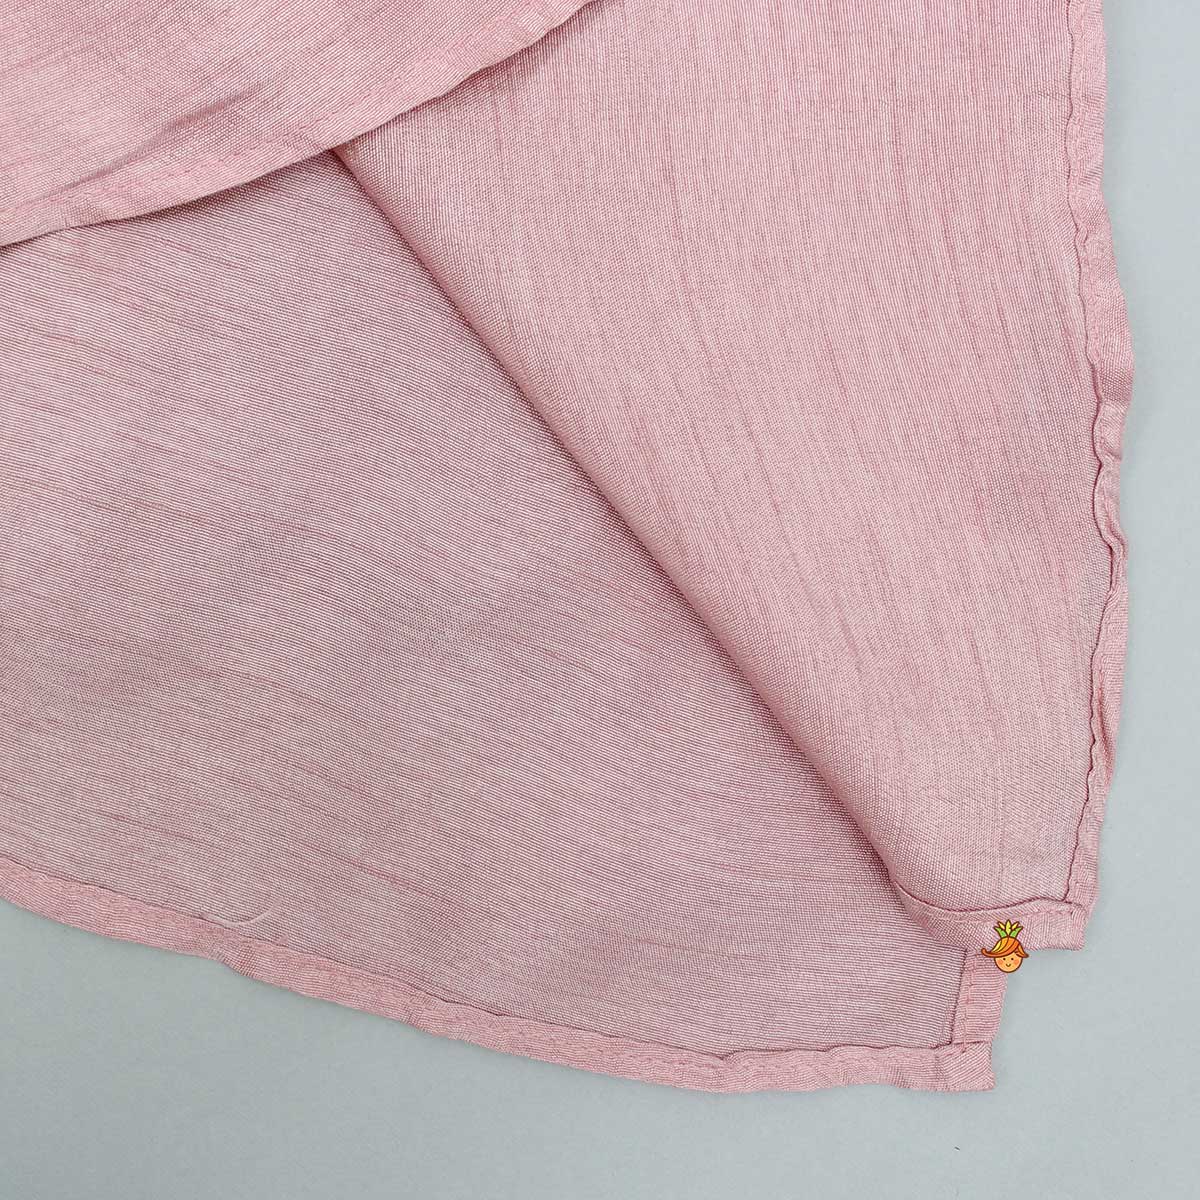 Embroidered Yoke Pink Kurta And Beige Pyjama